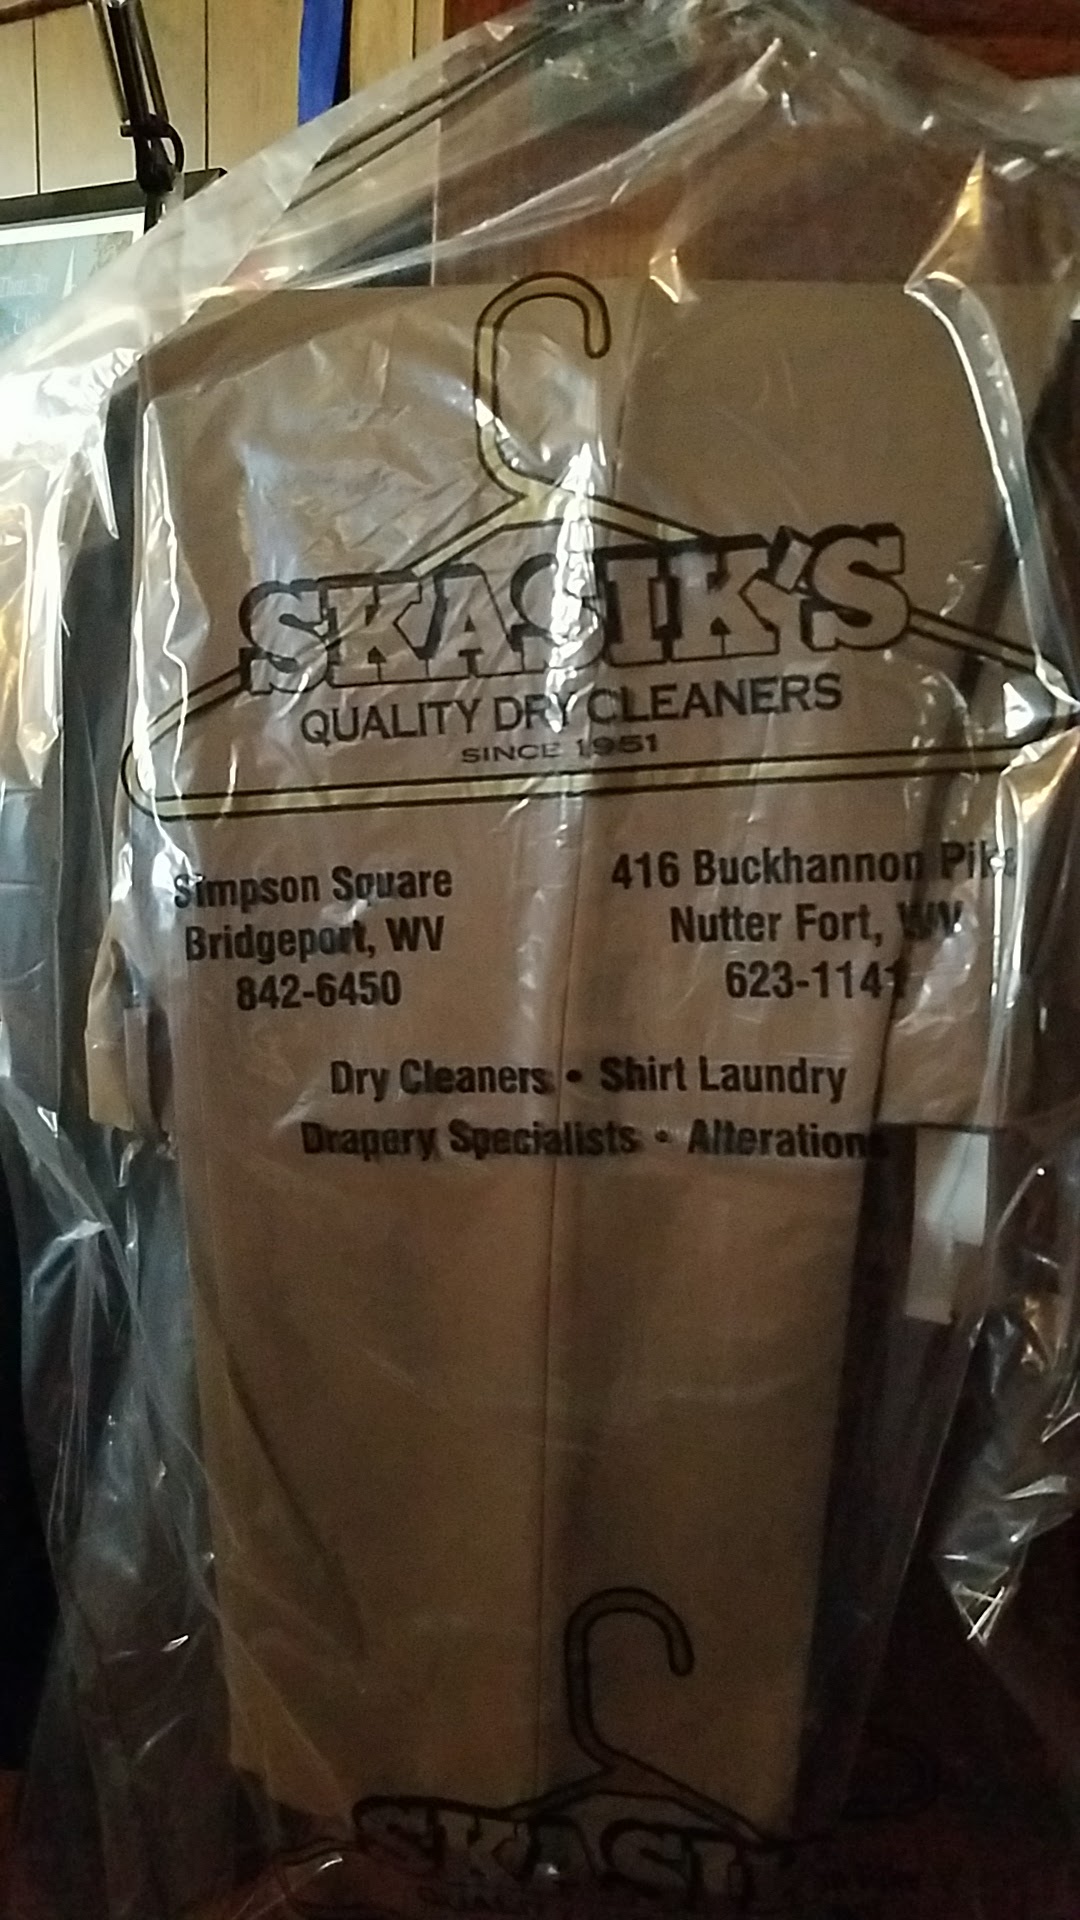 Skasik's Quality Cleaners 416 Buckhannon Pike, Clarksburg West Virginia 26301